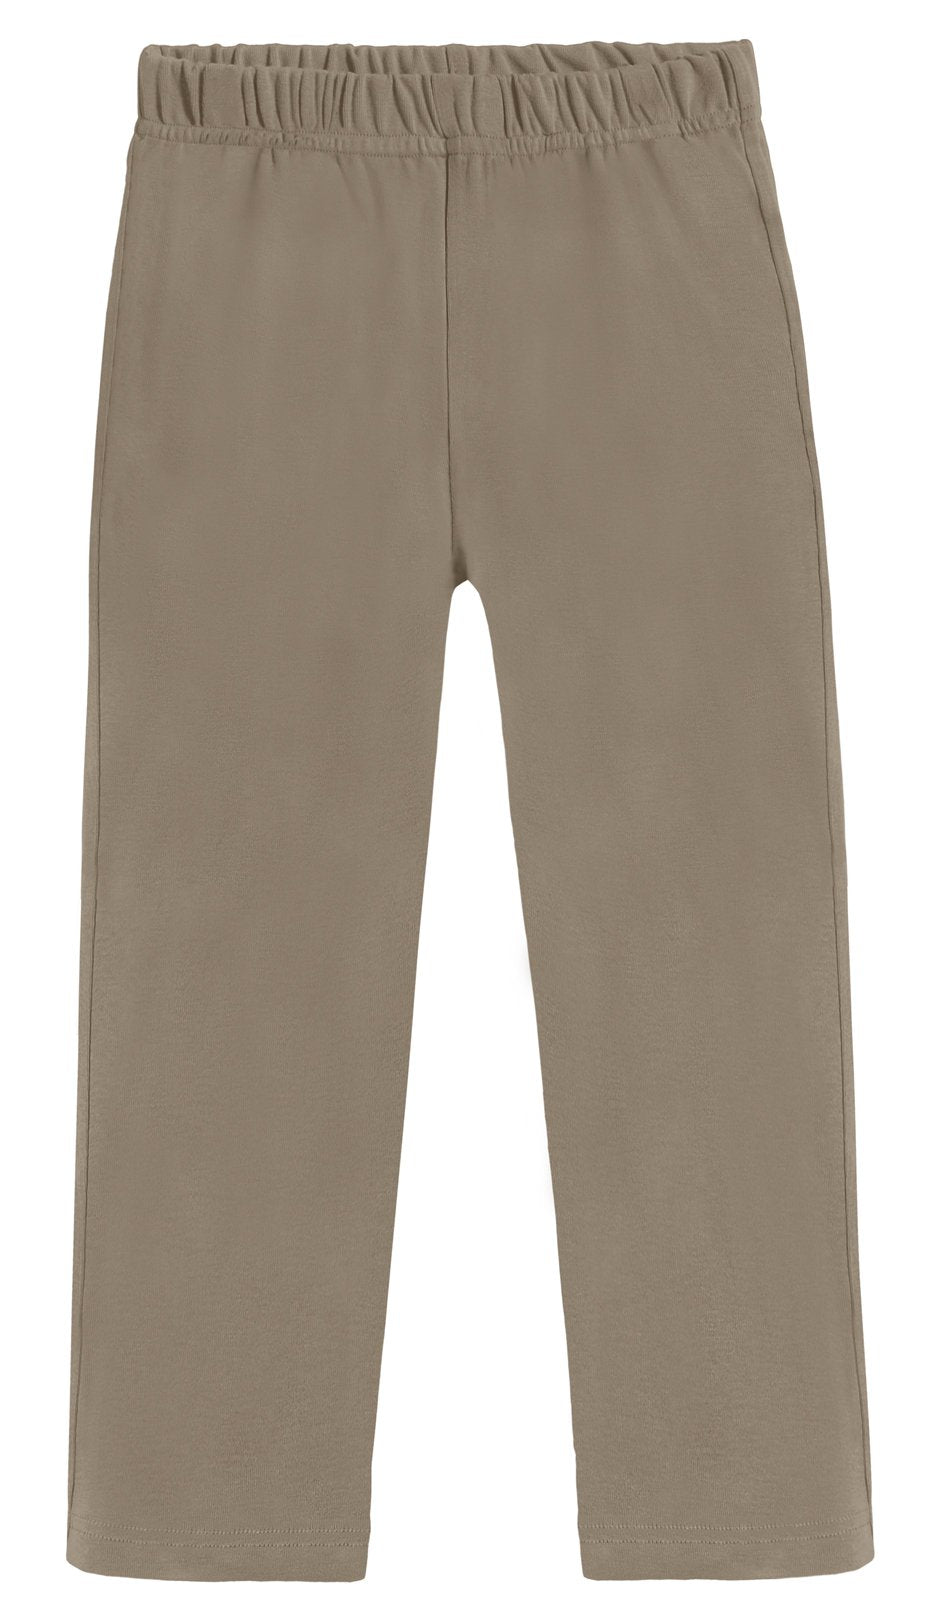 Boys Soft Cotton Athletic Pants - UPF 50+ | Dark Khaki - City Threads USA